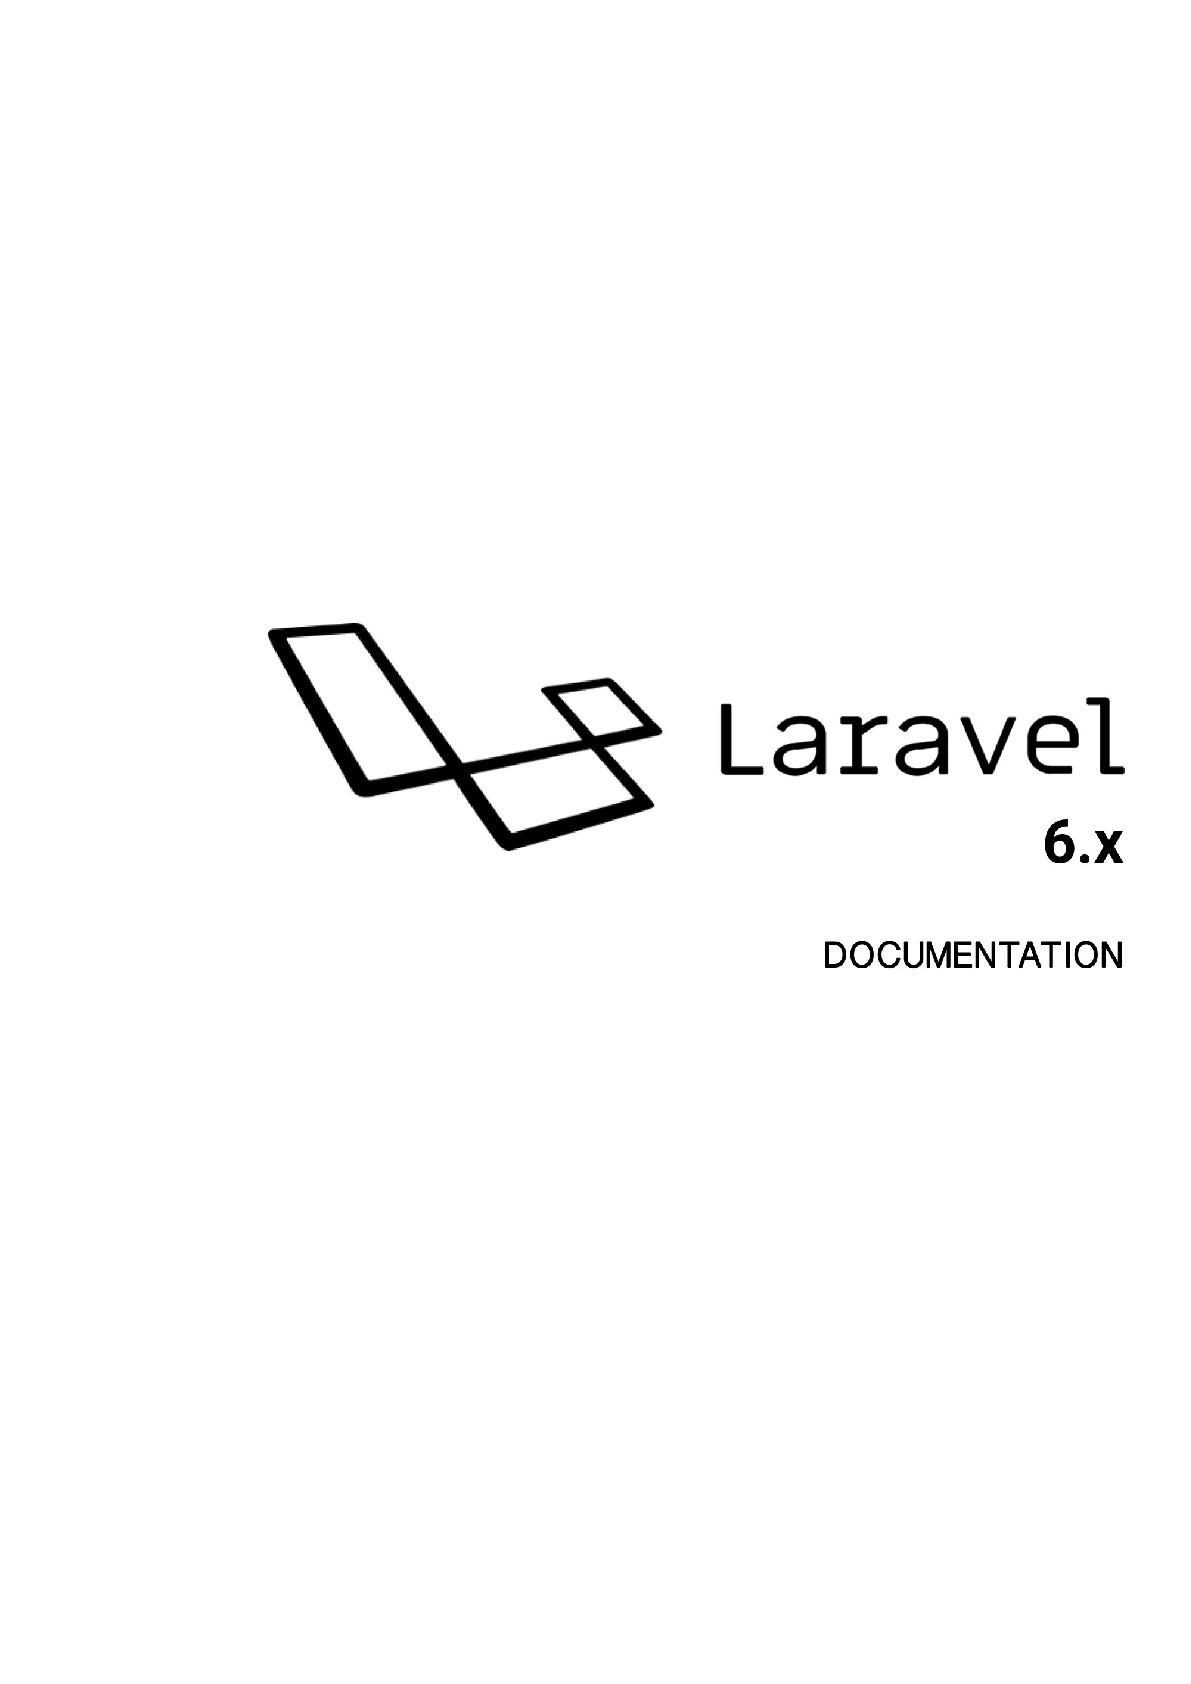 laravel-docs-6.x